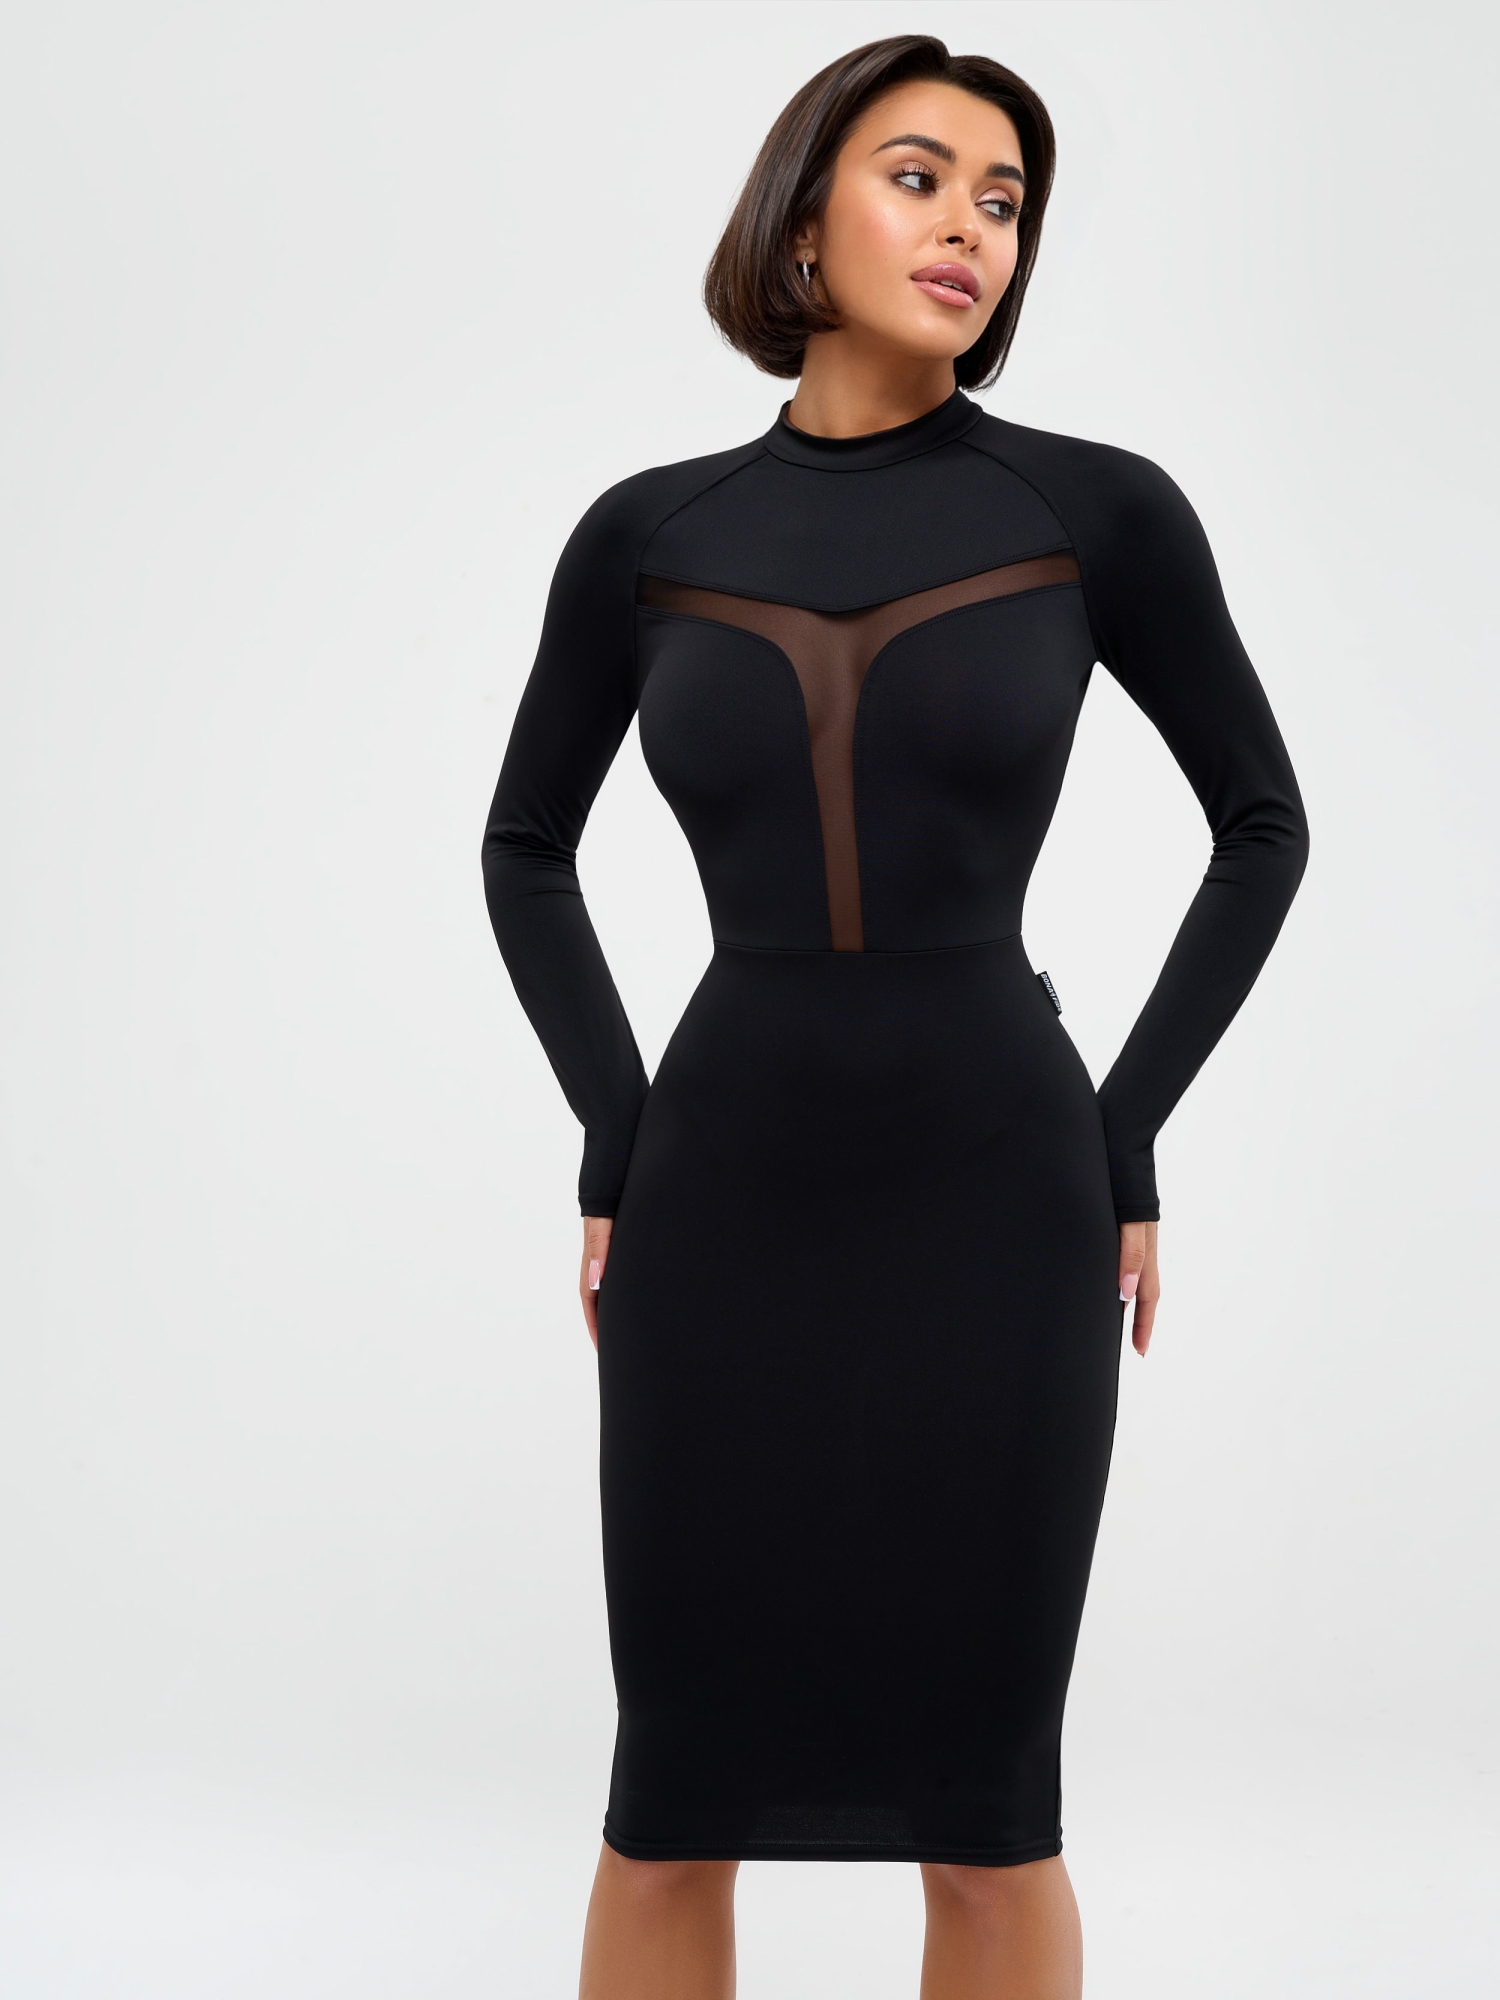 Bona Fashion: Aphrodisiac Dress "Black" фото 7